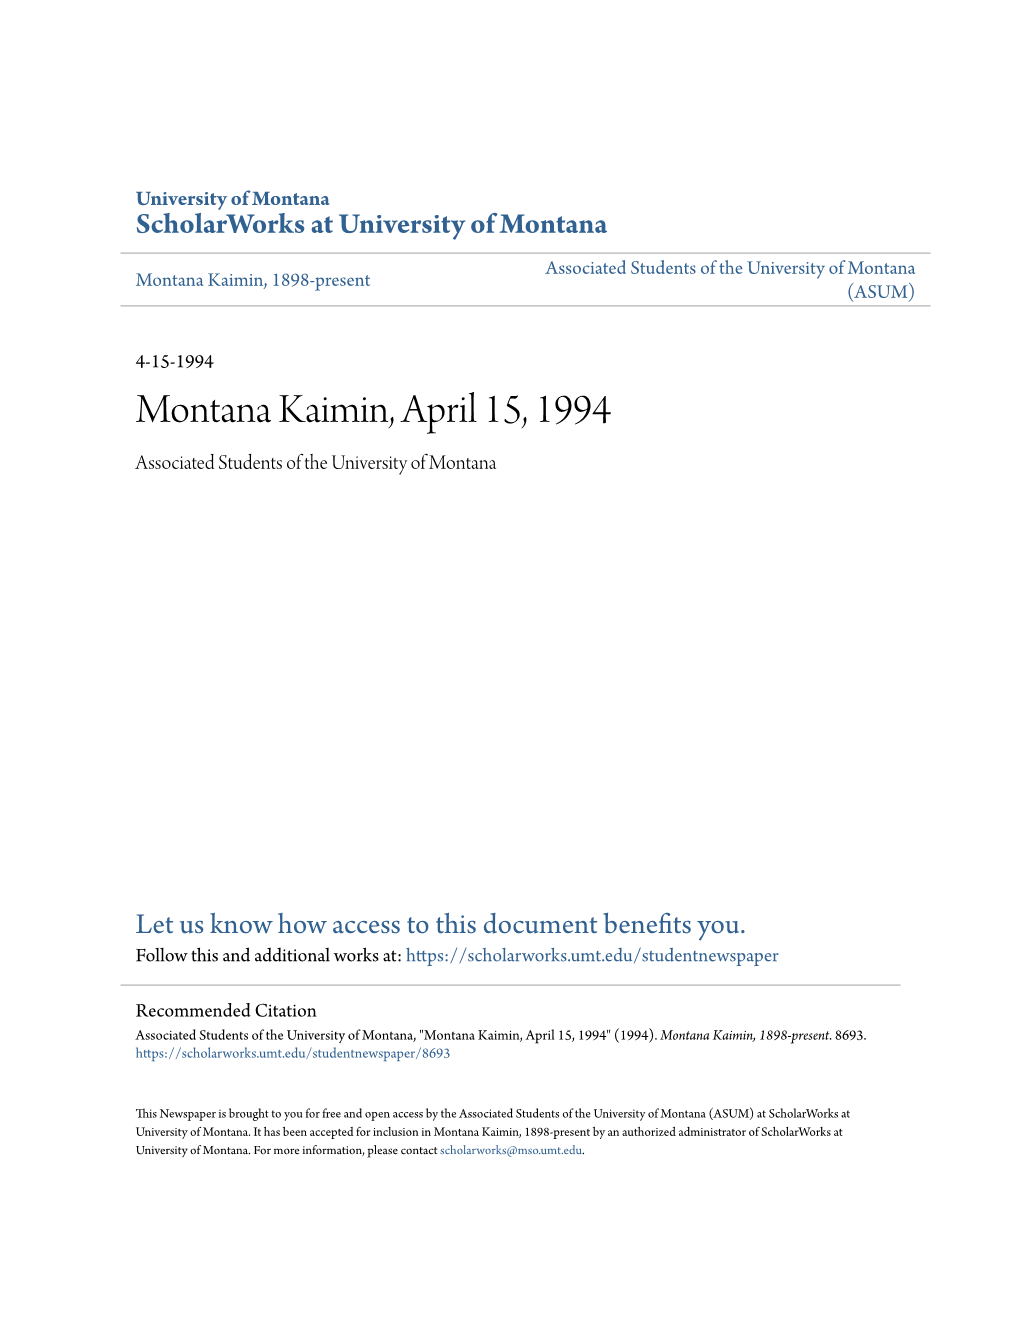 Montana Kaimin, April 15, 1994 Associated Students of the University of Montana